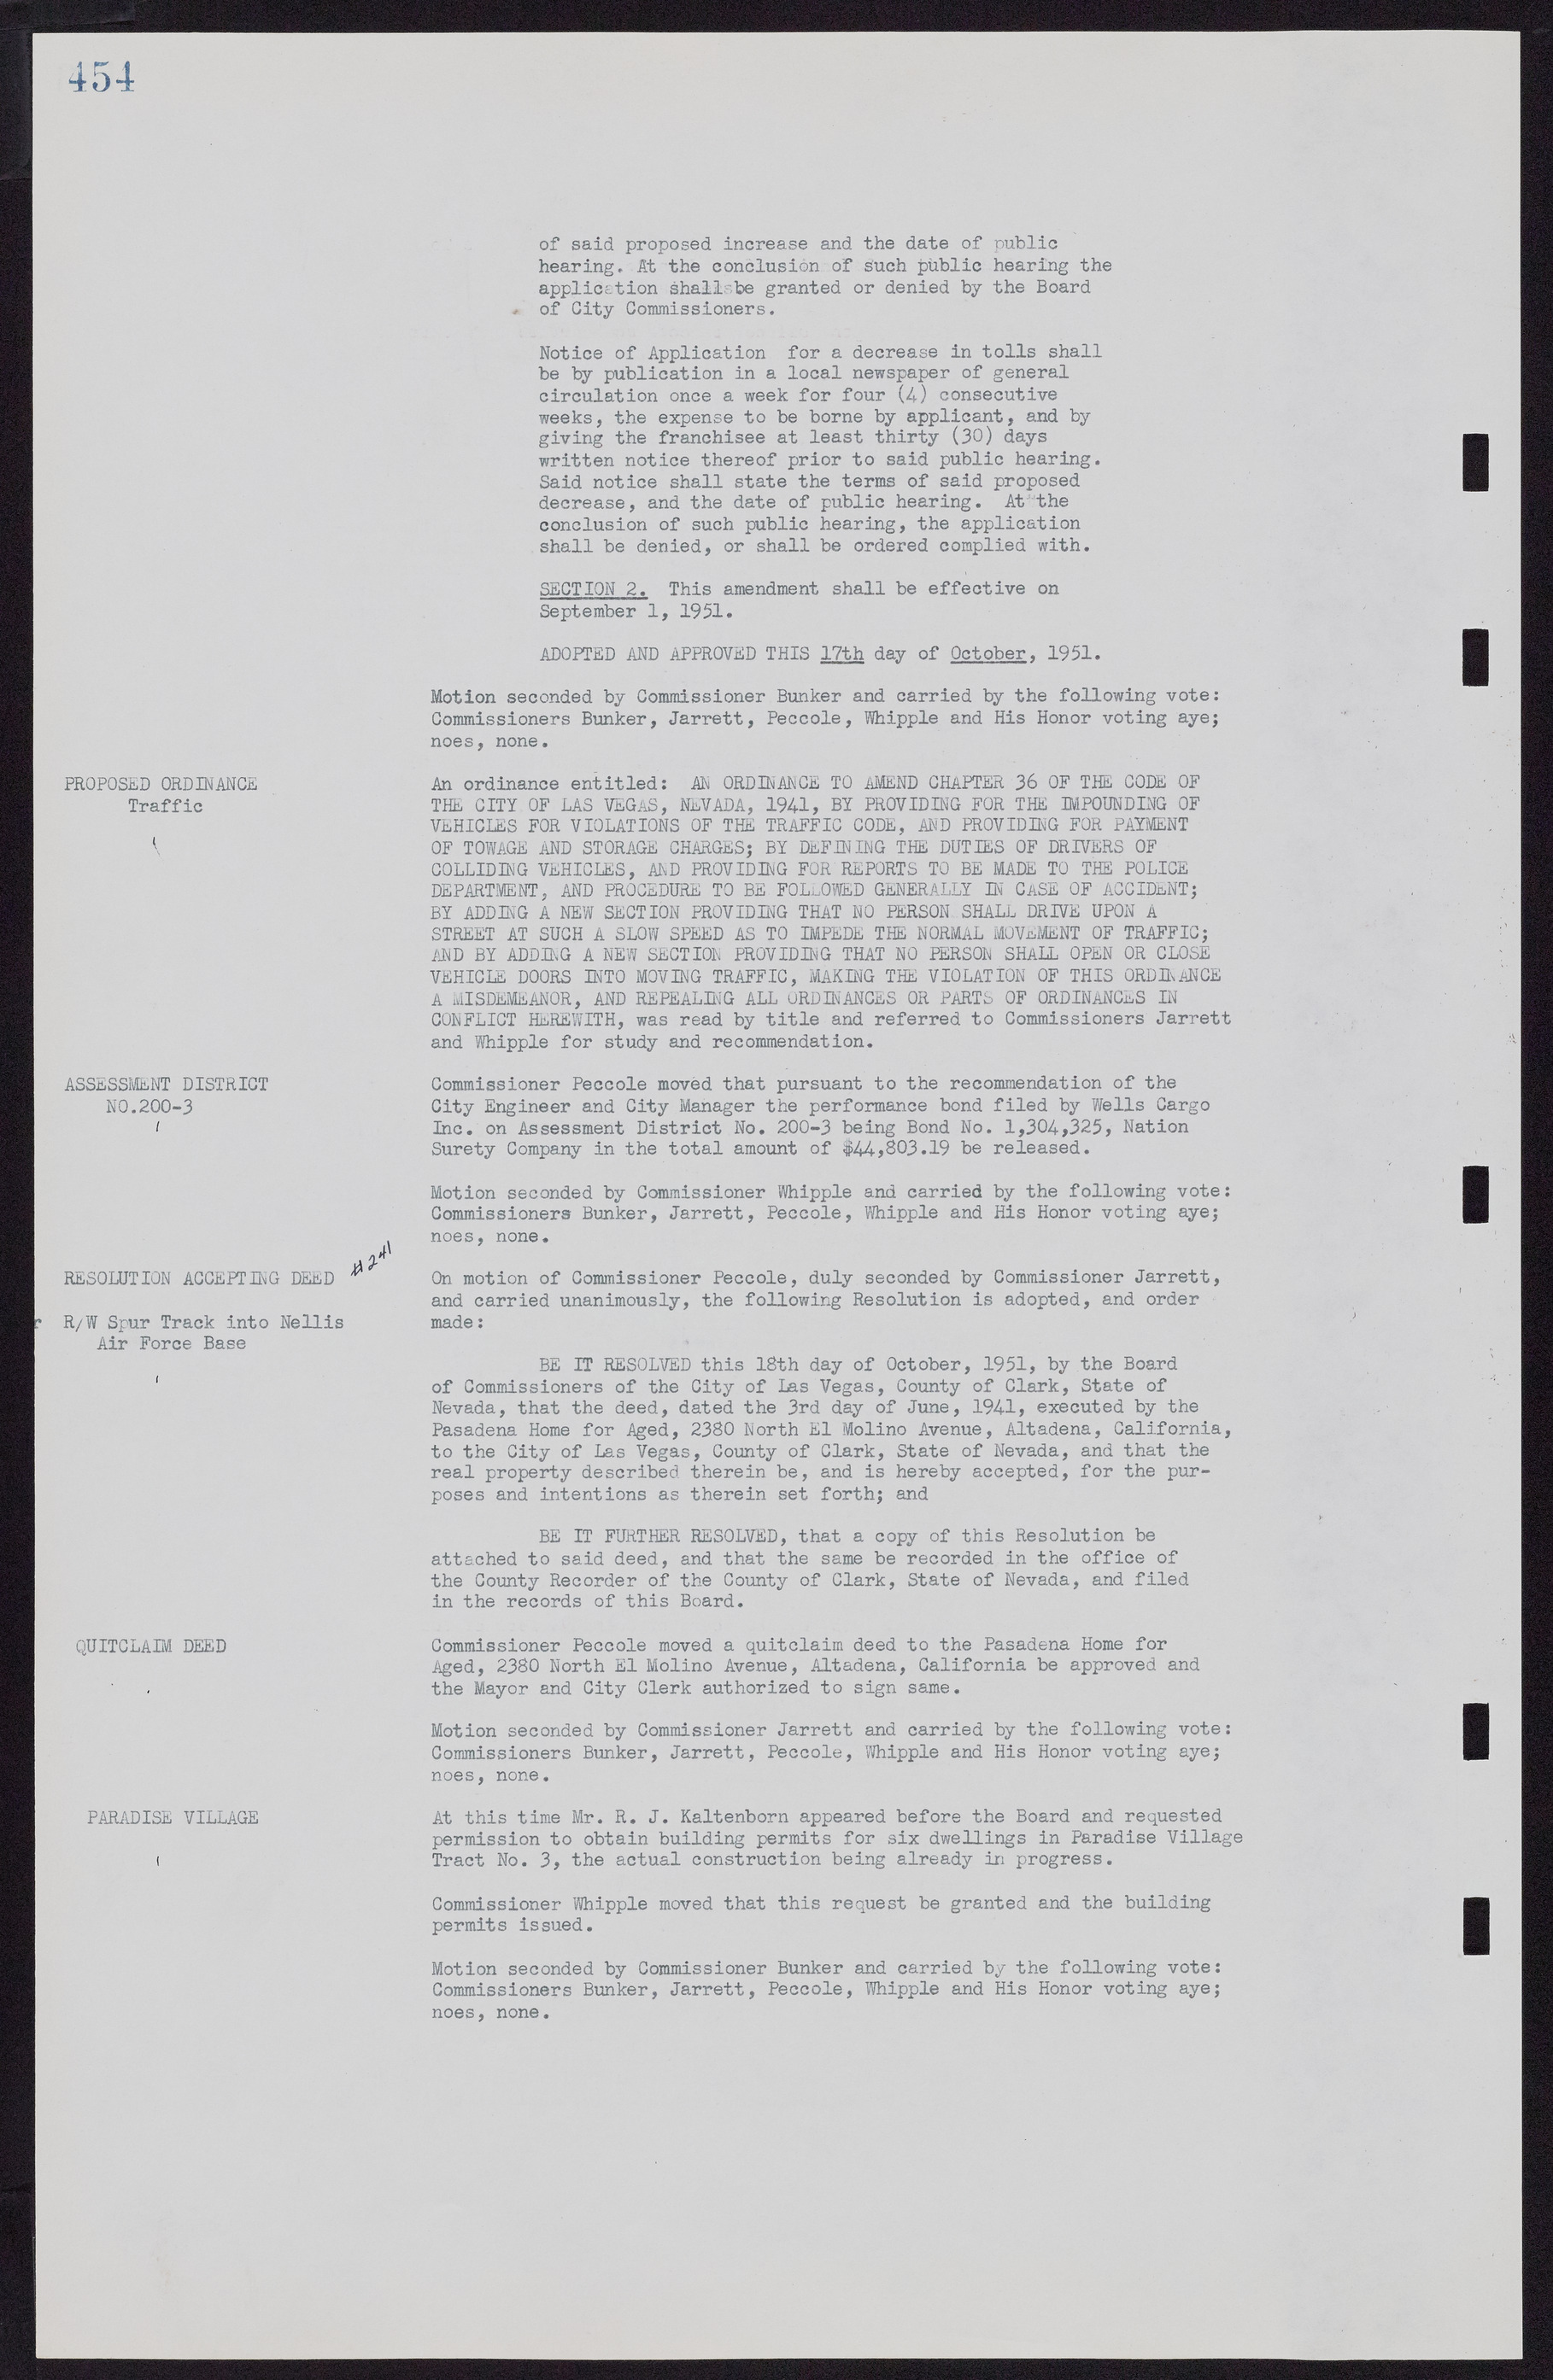 Las Vegas City Commission Minutes, November 7, 1949 to May 21, 1952, lvc000007-470